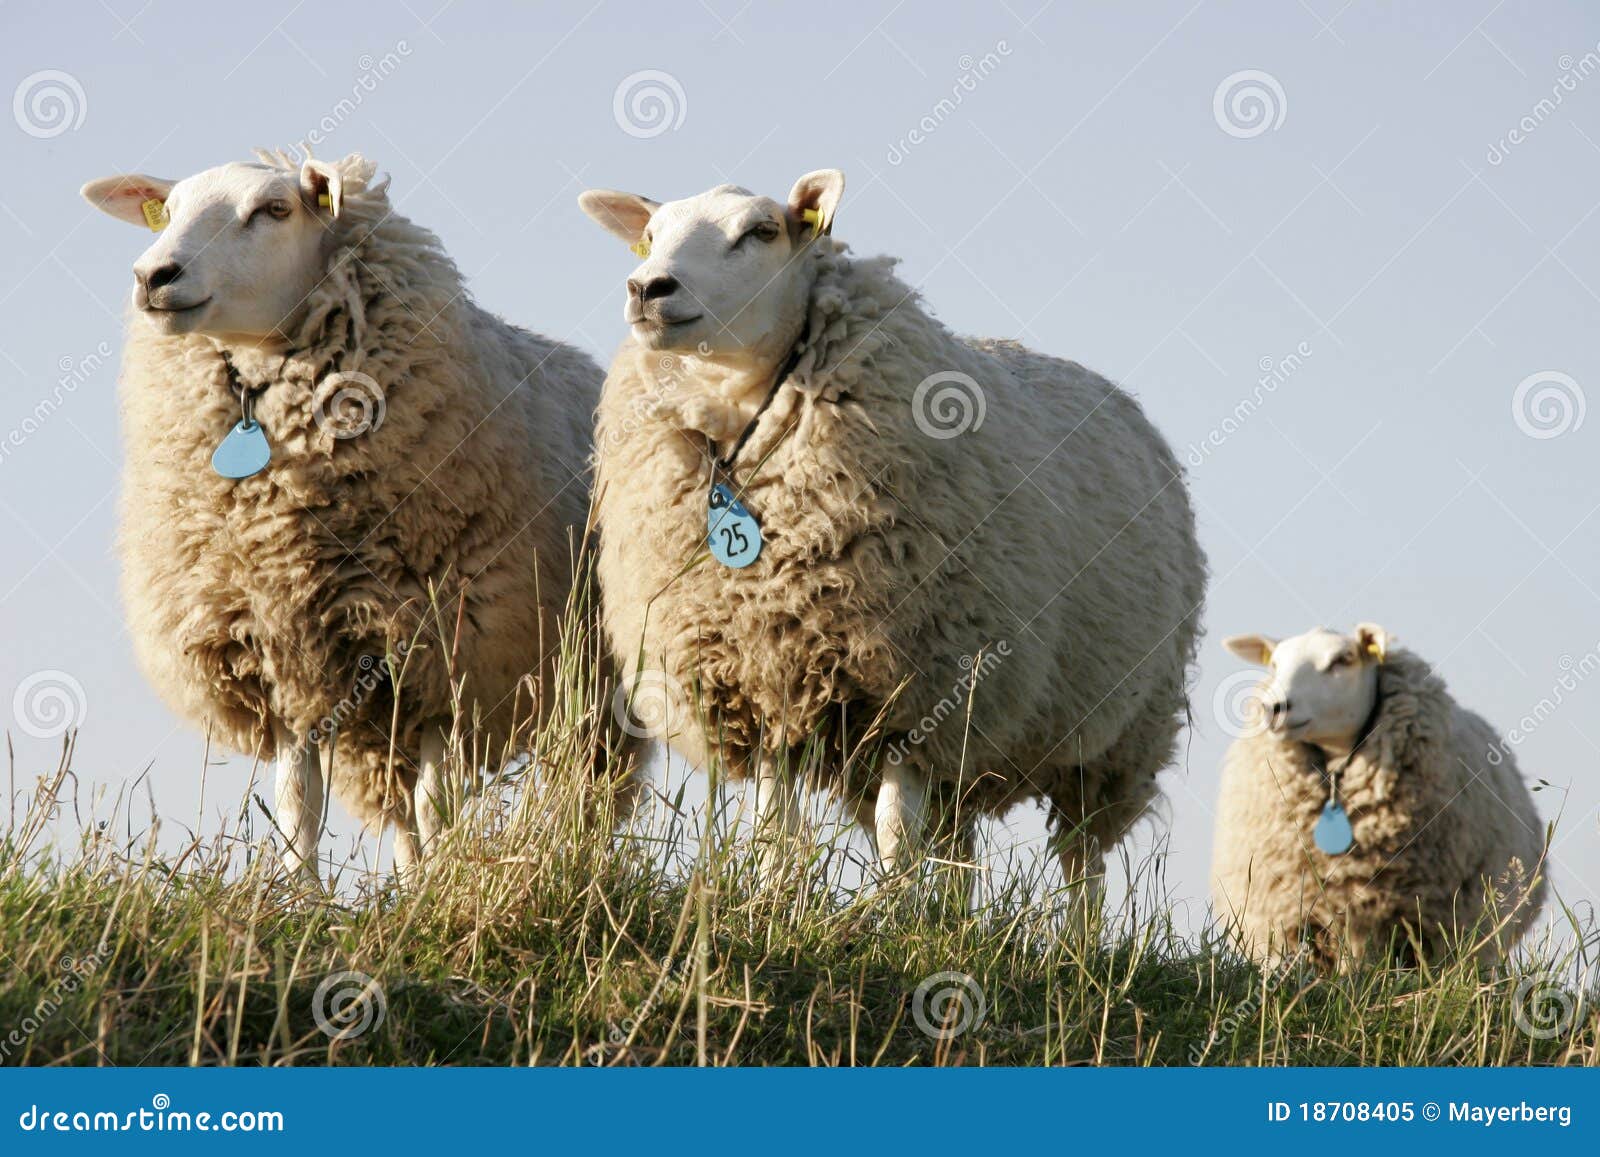 Sheep stock image. Image of nature, animal, wool, summer - 18708405